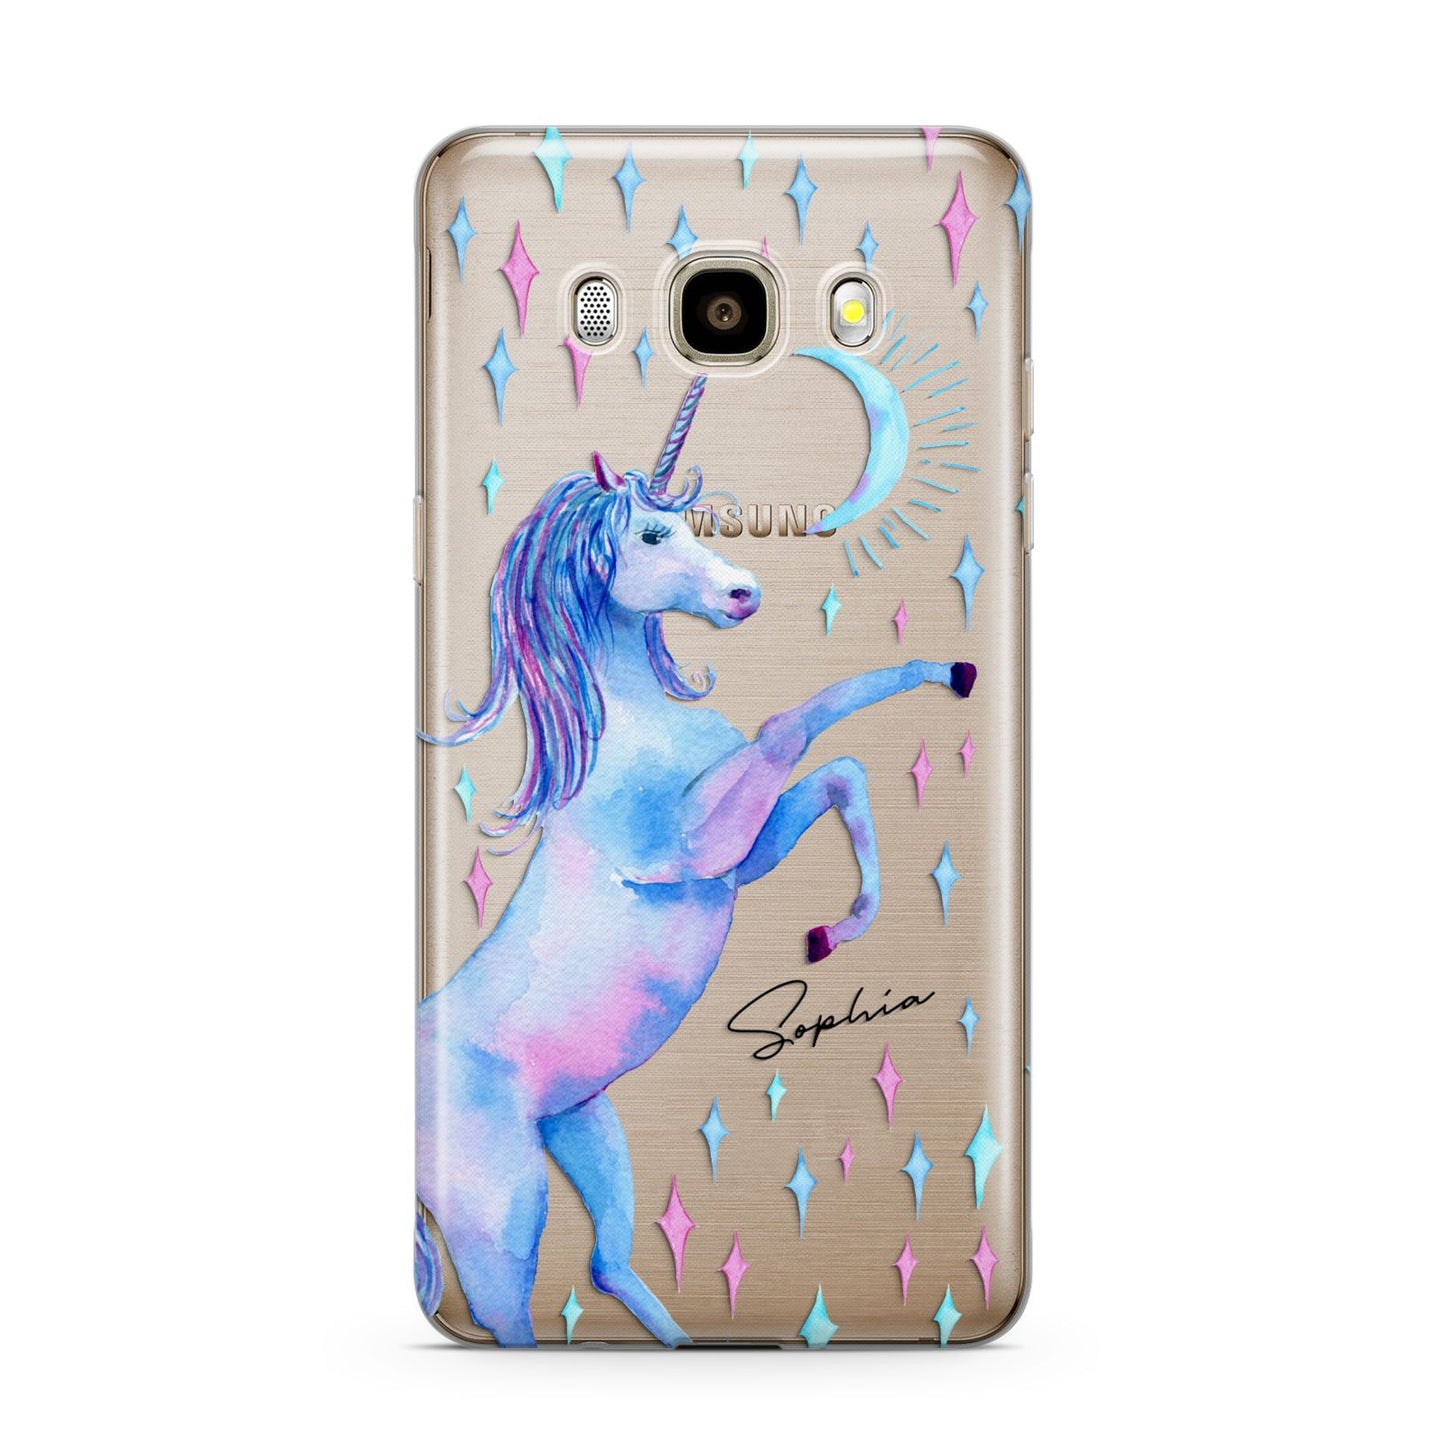 Personalised Unicorn Name Samsung Galaxy J7 2016 Case on gold phone